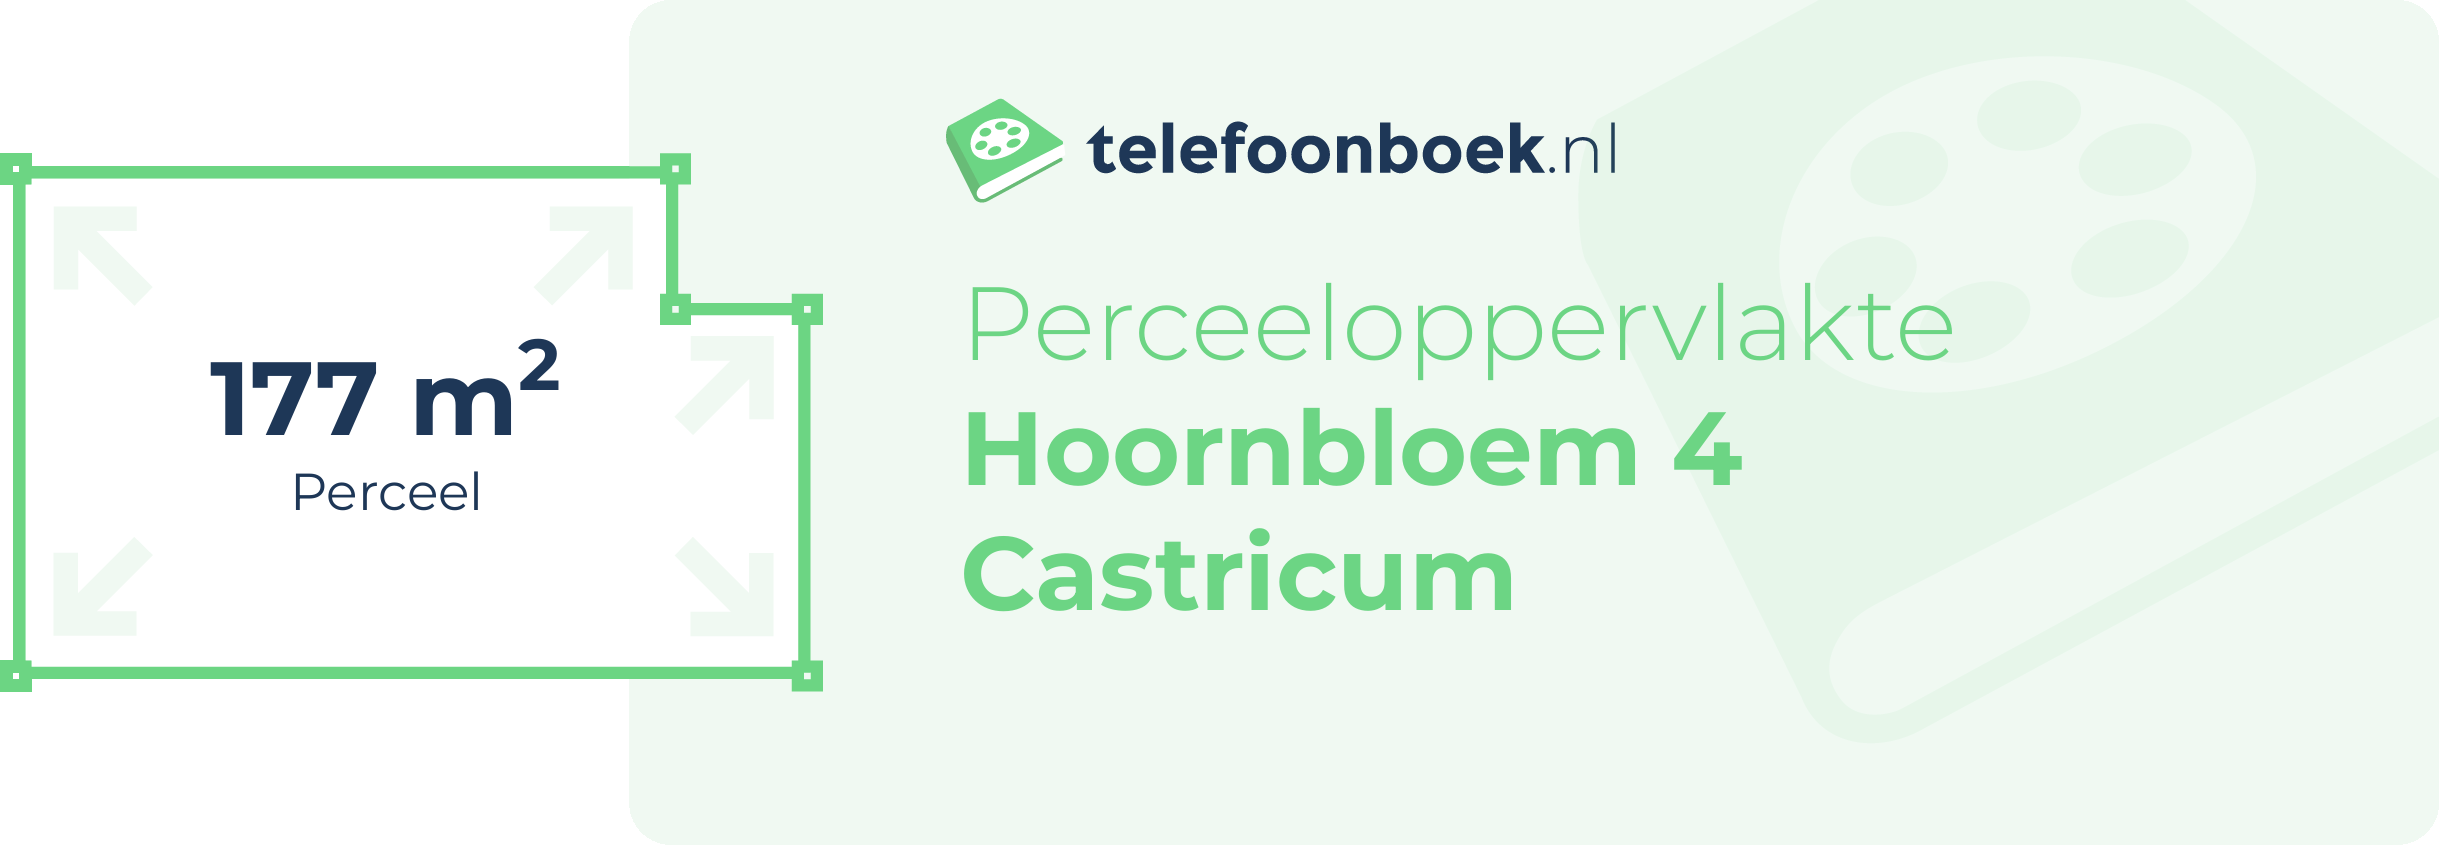 Perceeloppervlakte Hoornbloem 4 Castricum